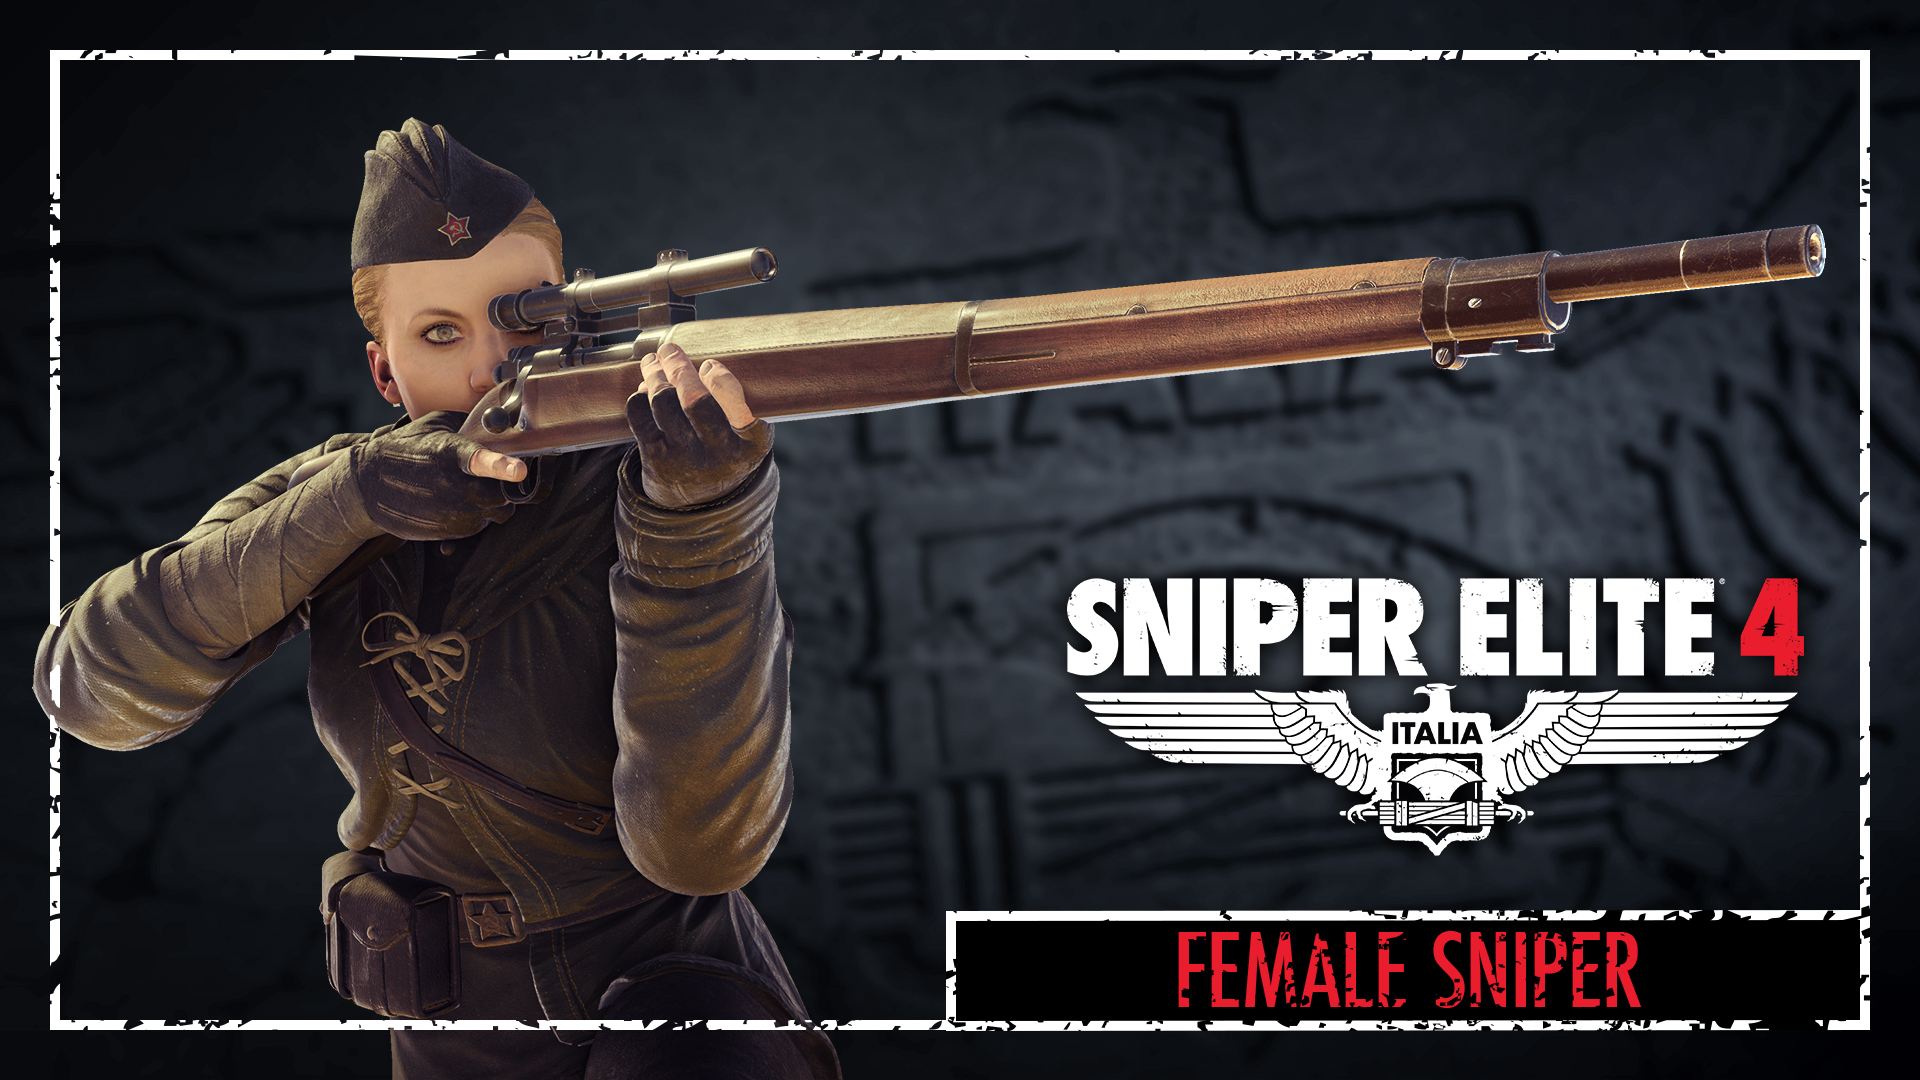 [$ 5.64] Sniper Elite 4 - Covert Heroes Character Pack DLC Steam CD Key